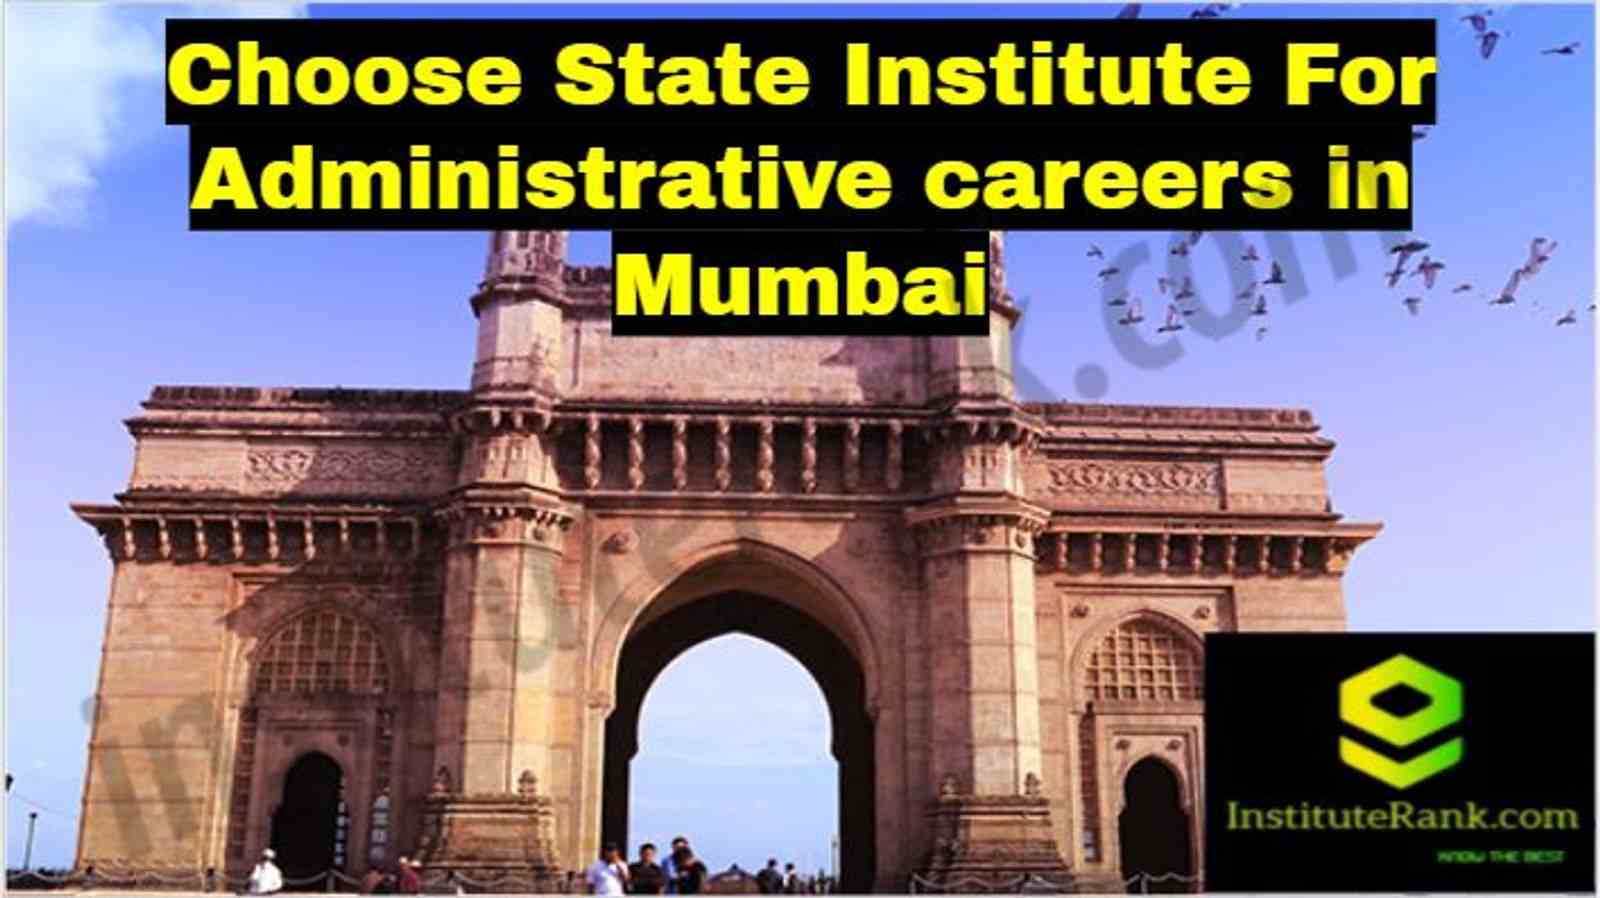 Choose State Institute for Administrative Careers in Mumbai